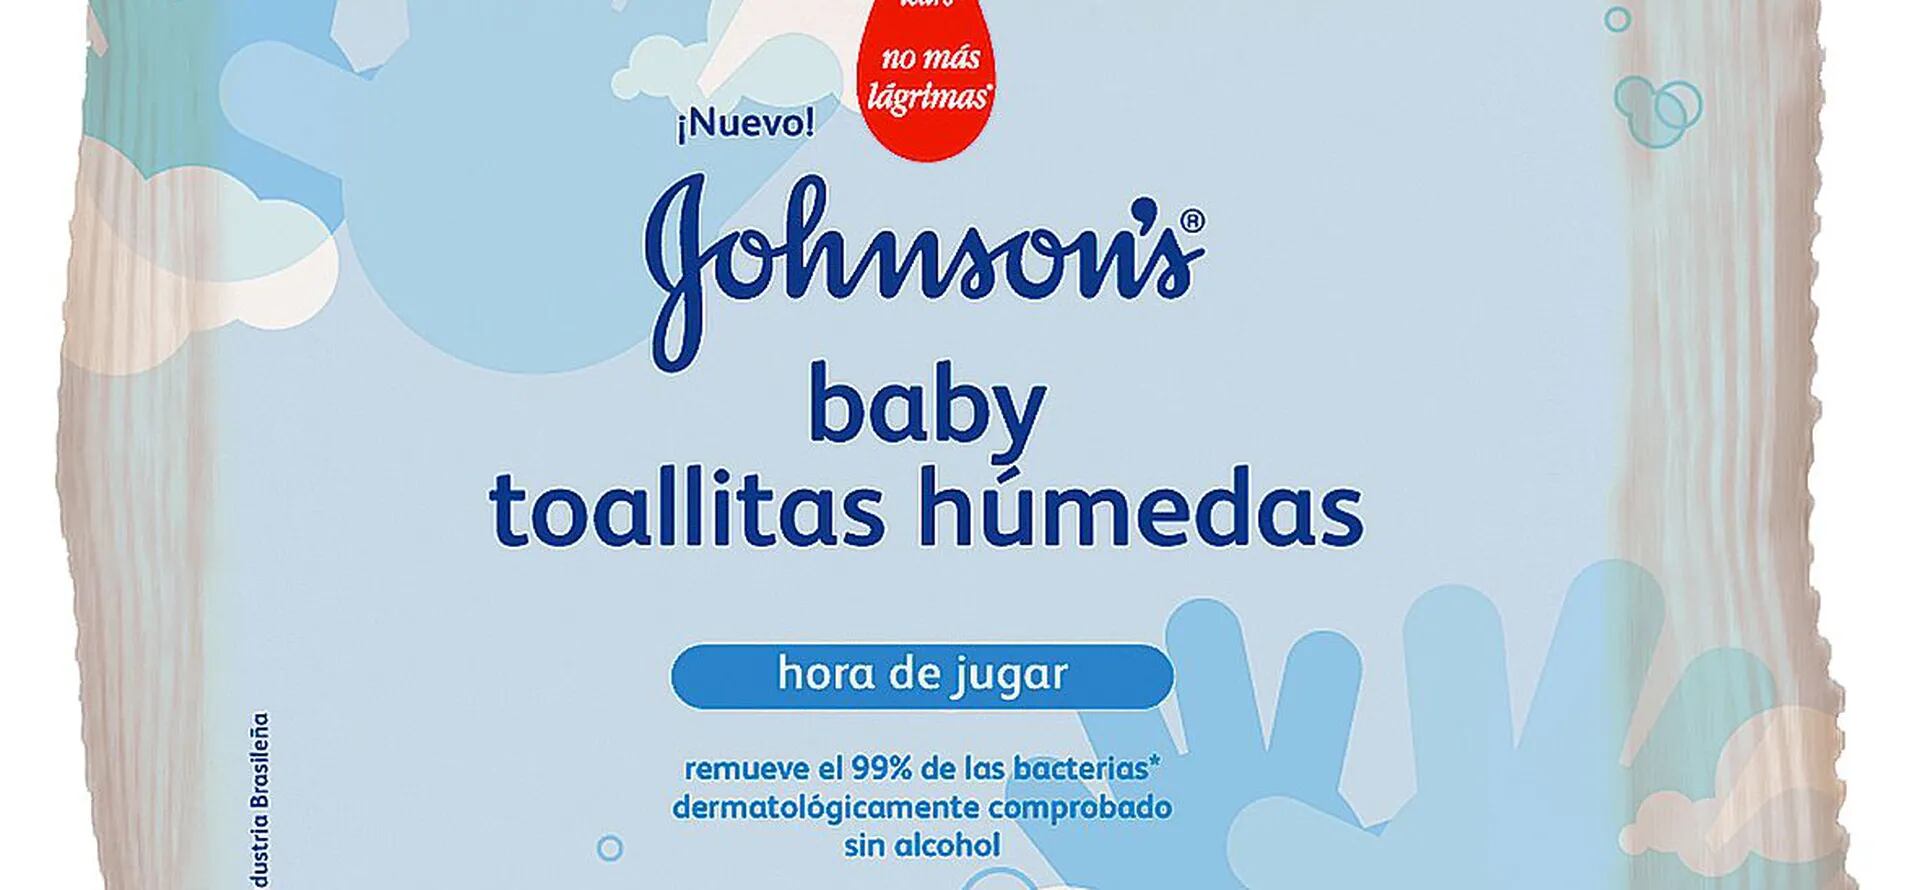 JOHNSONS BABY SE REINVENTA - Revista Momentos